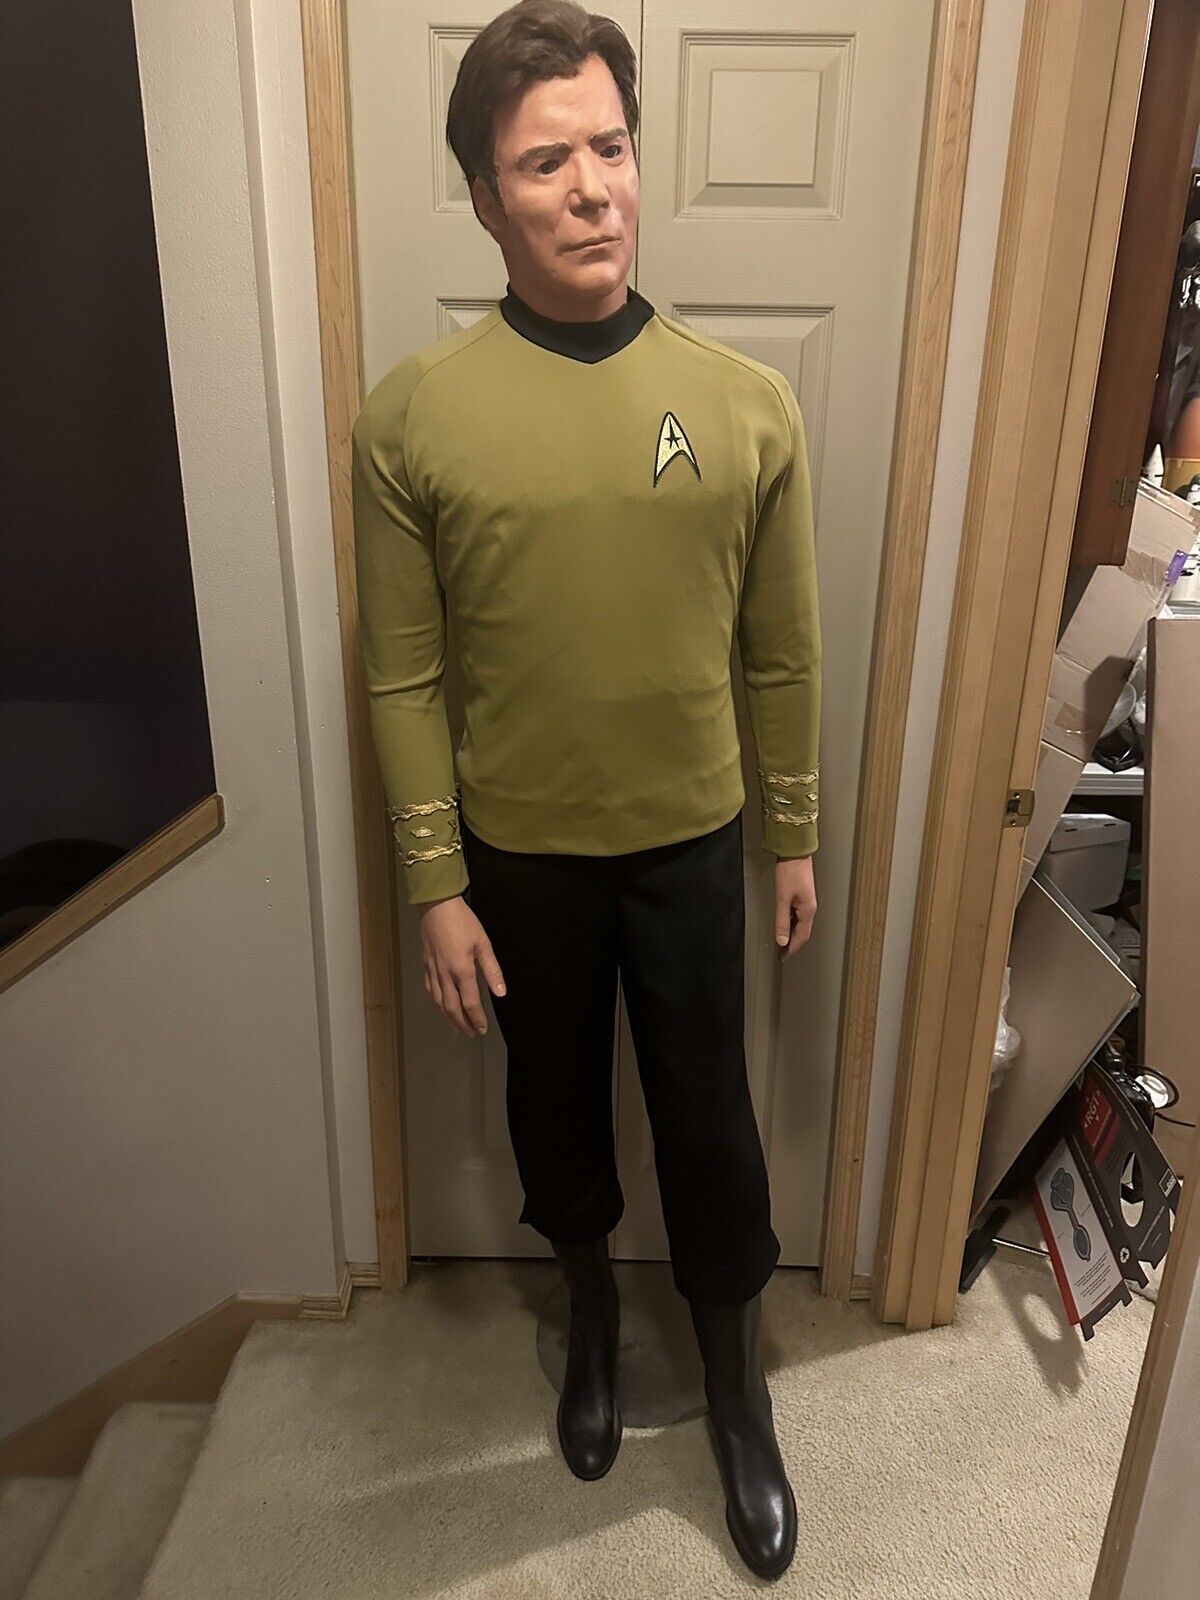 Lifesize Star Trek Captain Kirk figure 